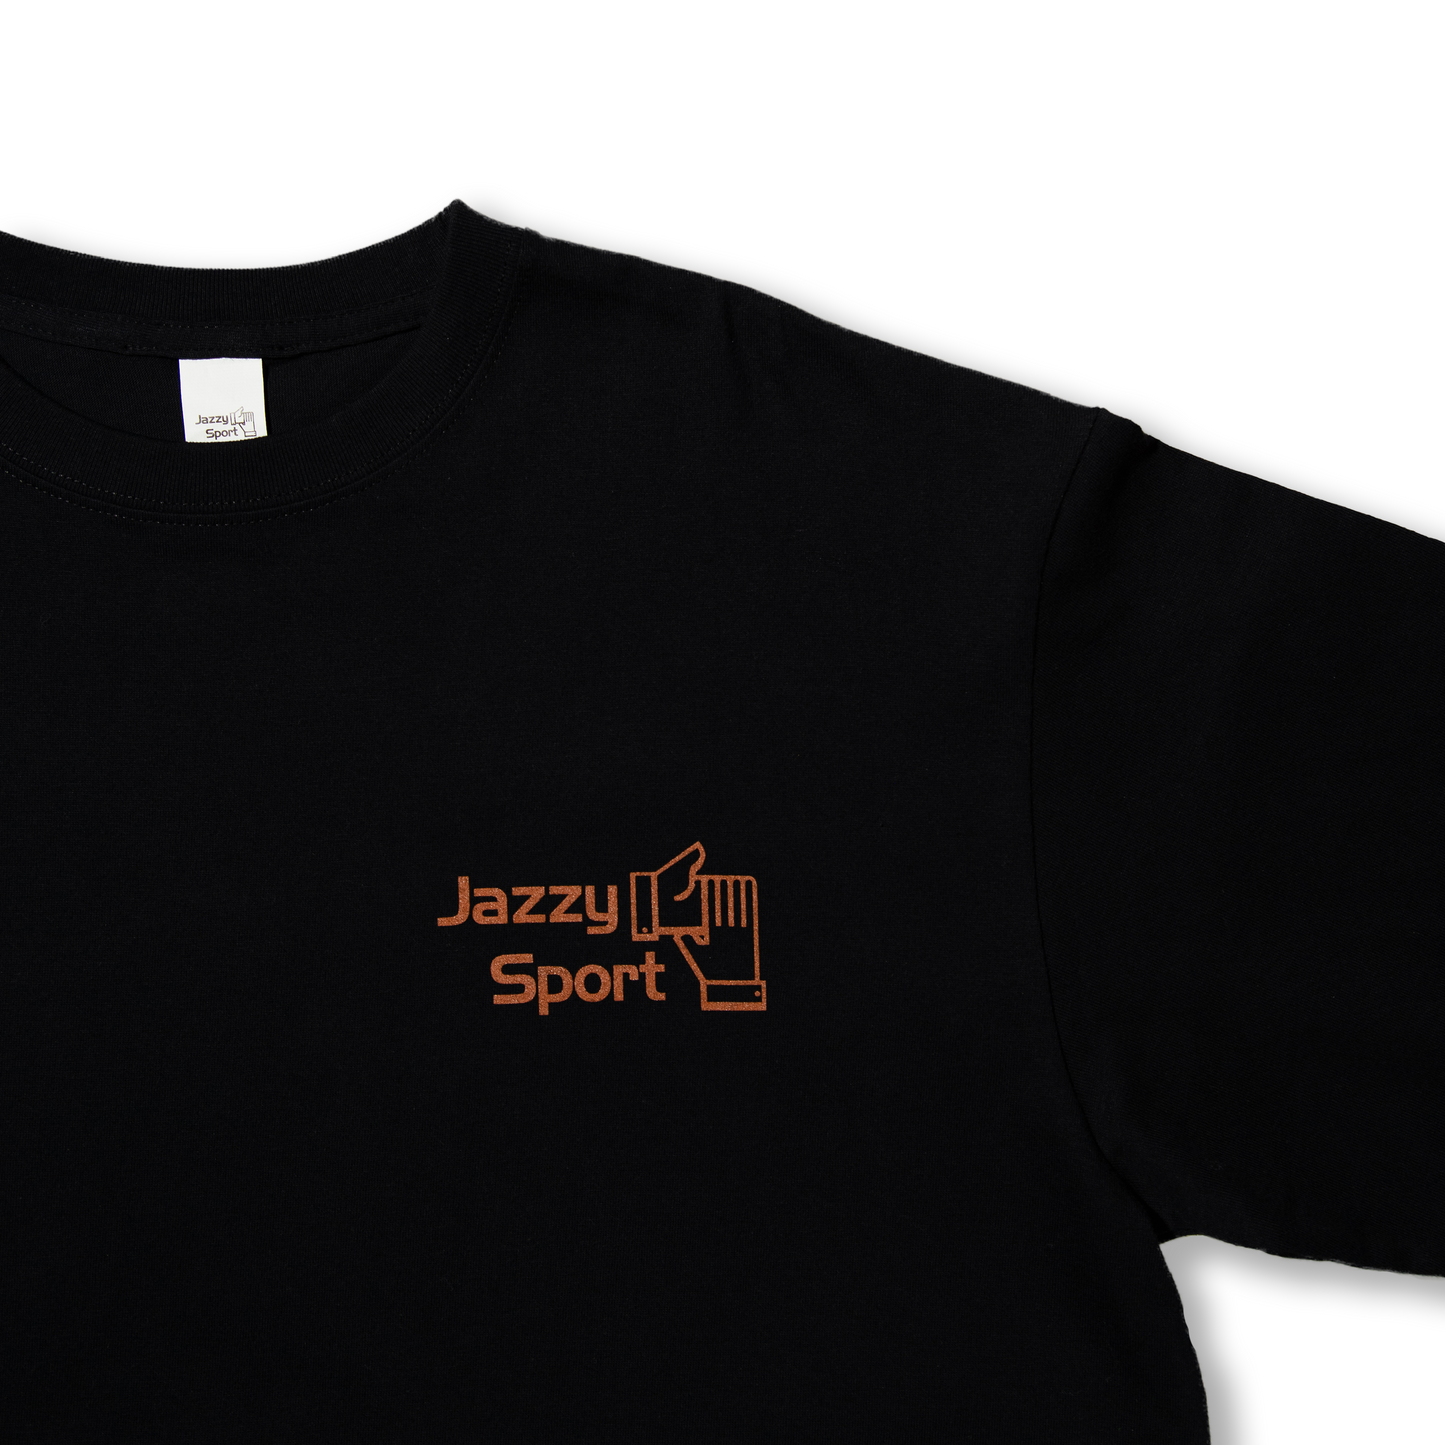 JS “Kyoto College Logo” ロングスリーヴ Tシャツ / ブラックx黒柿